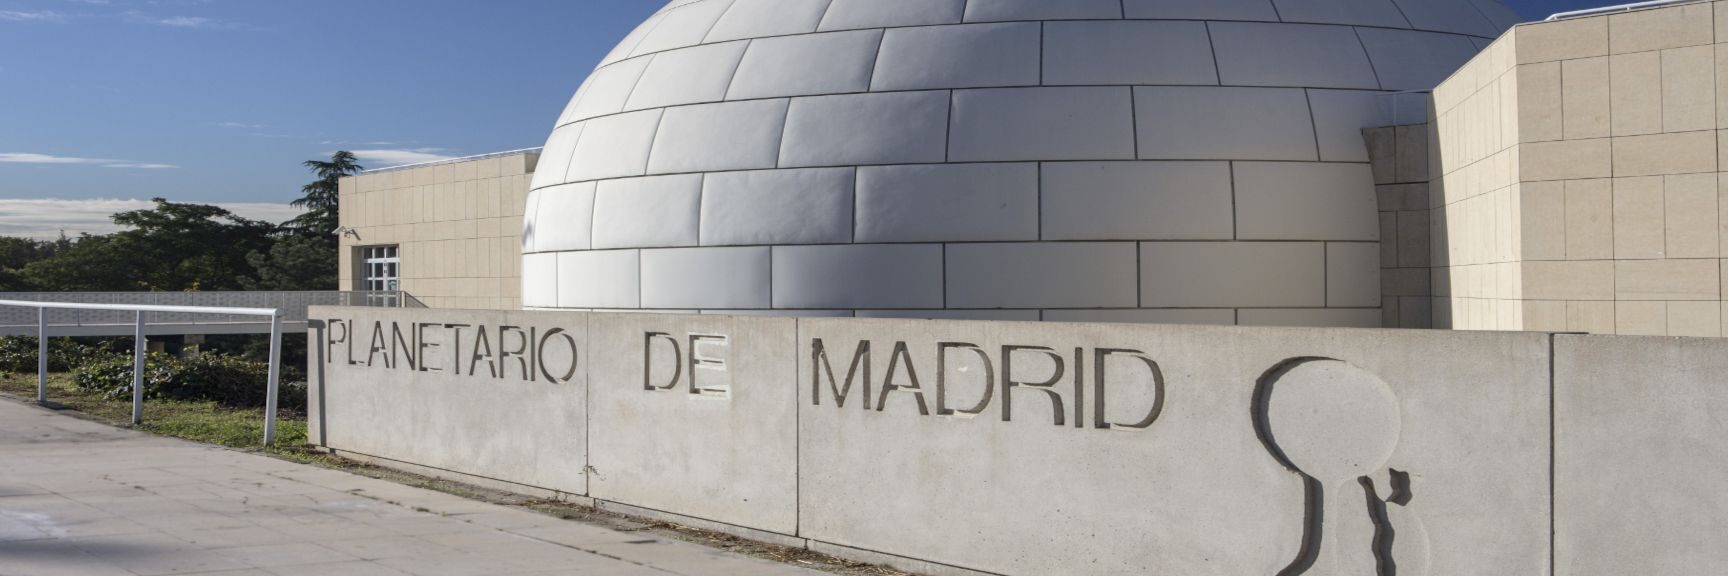 PLANETARIO DE MADRID		Madrid	Madrid	Museo